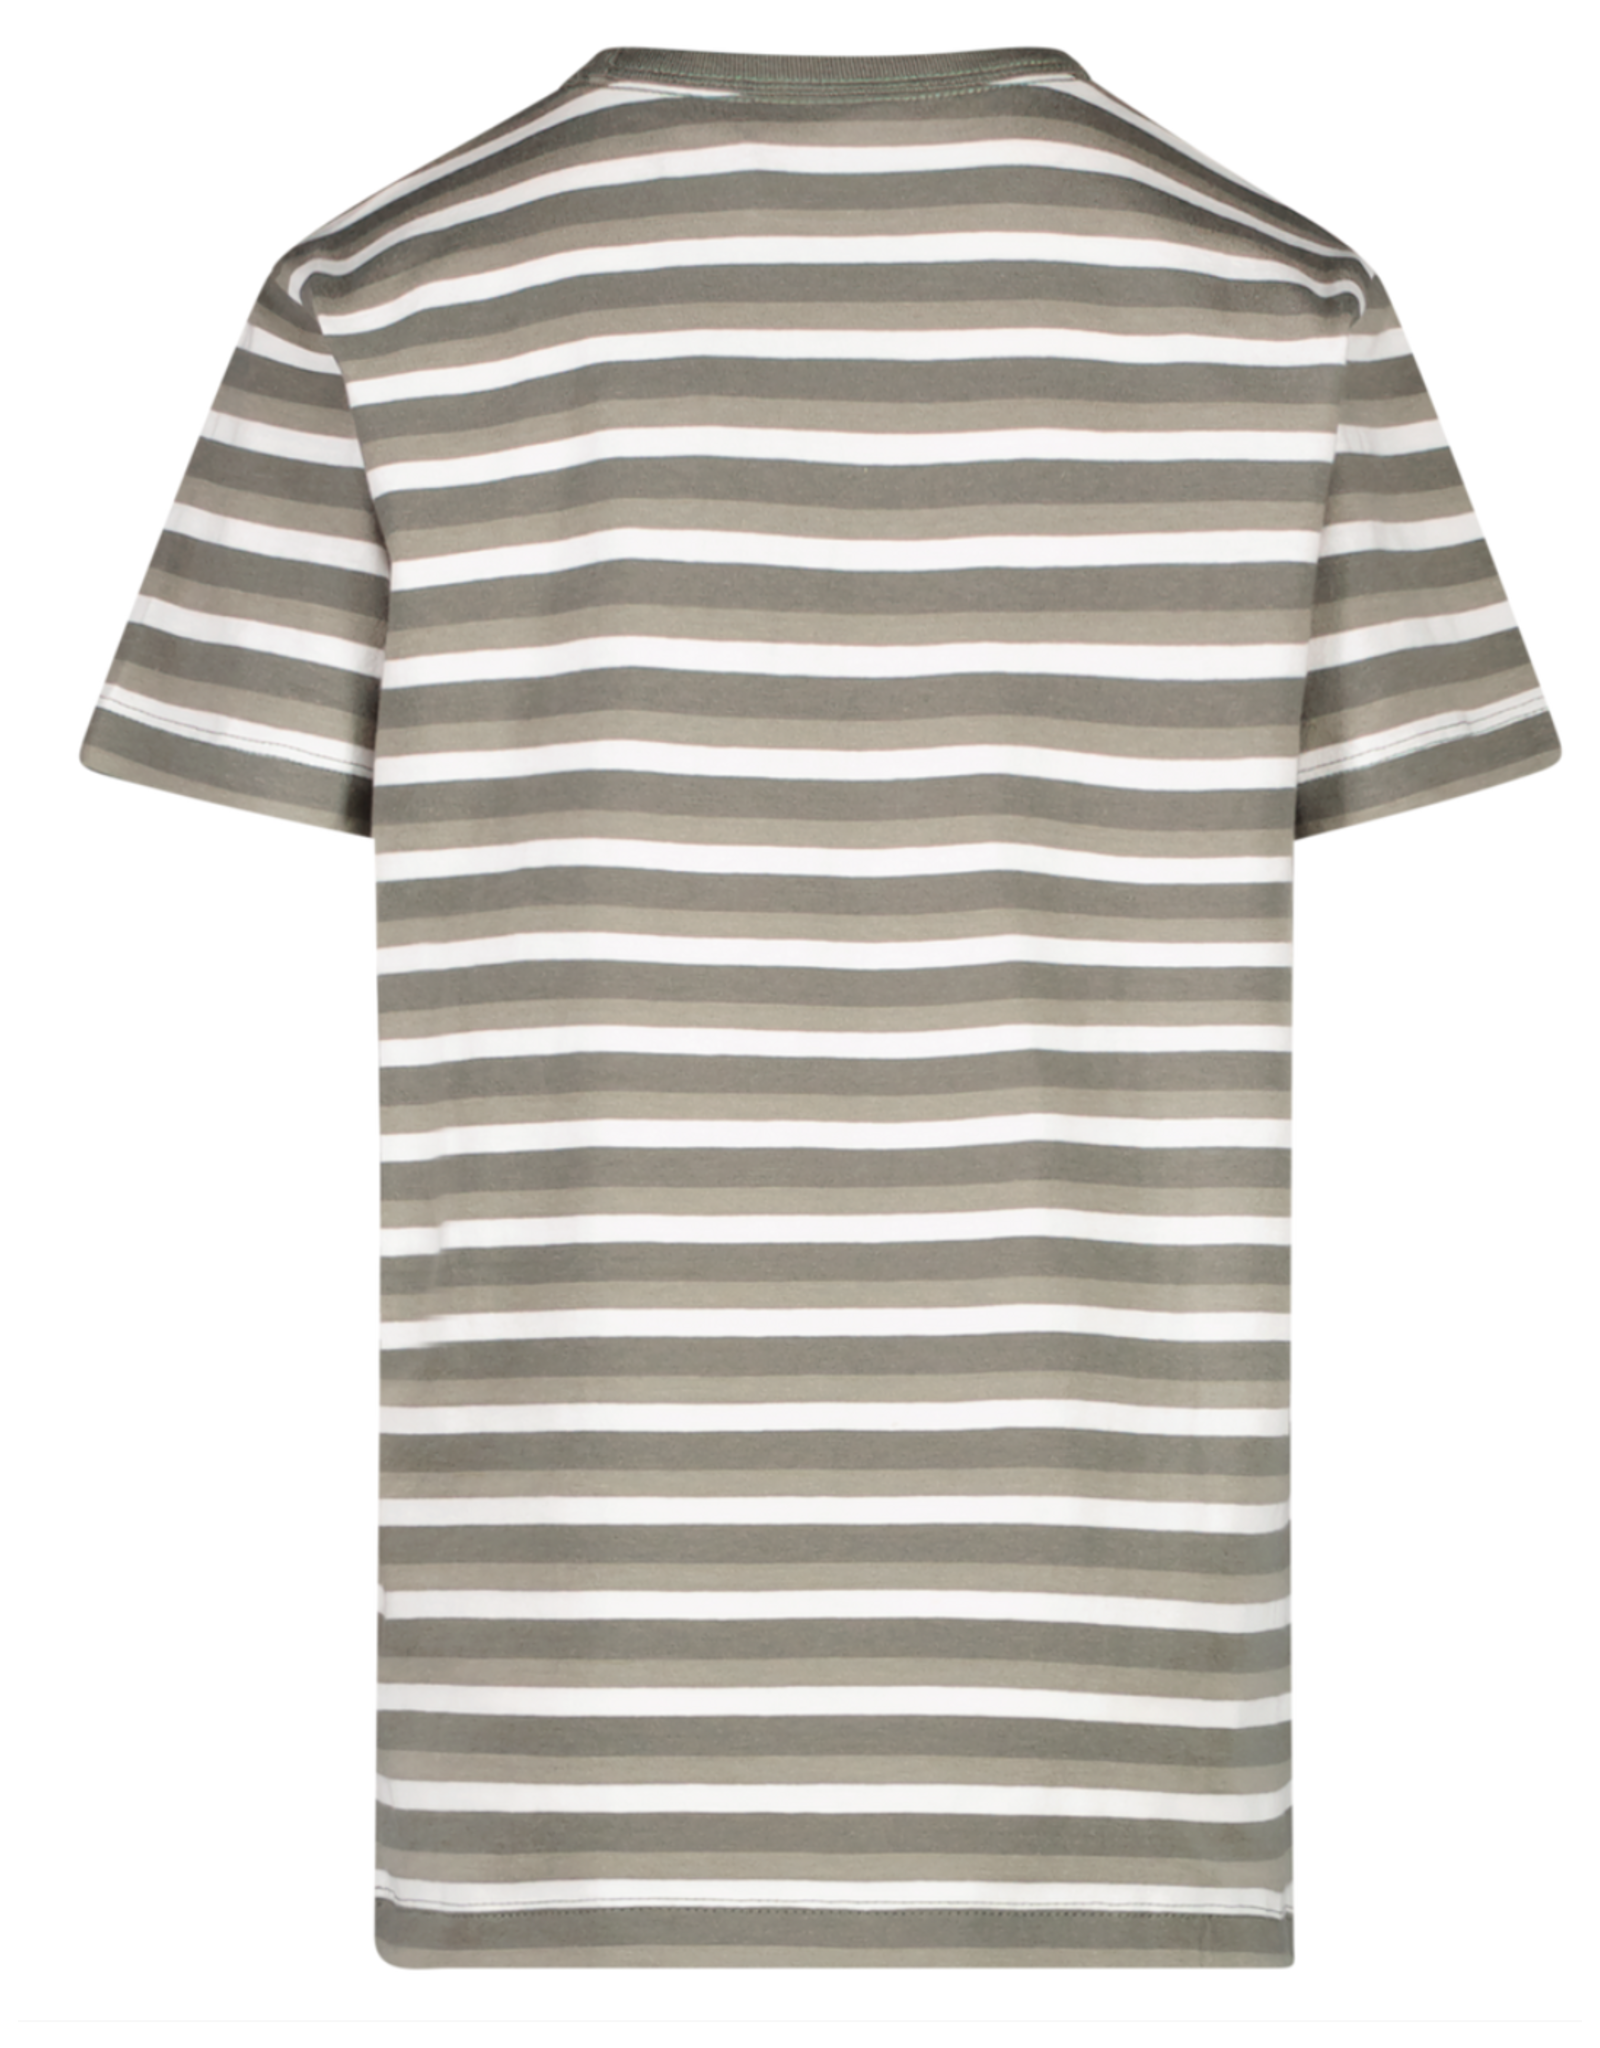 Cars t-shirt Broidy stripe mint